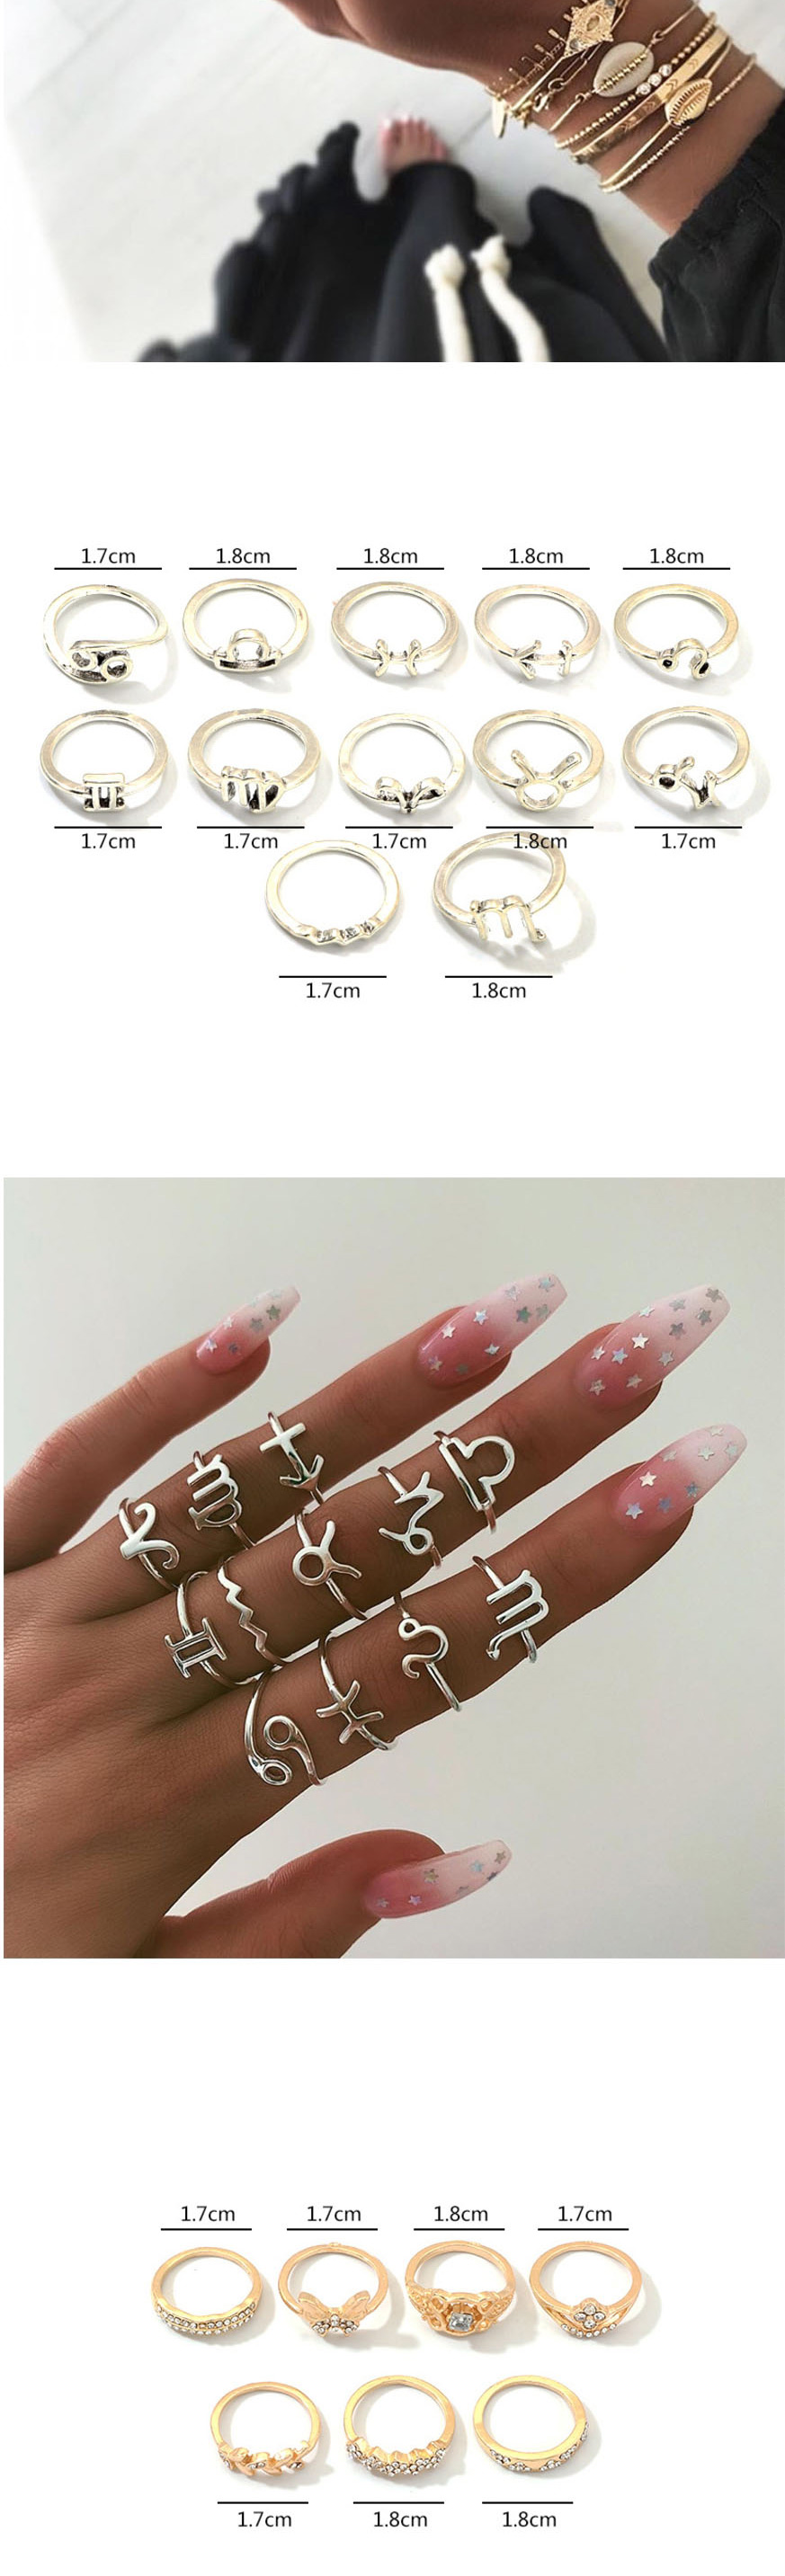 Fashion Silver Constellation Ring Set,Rings Set